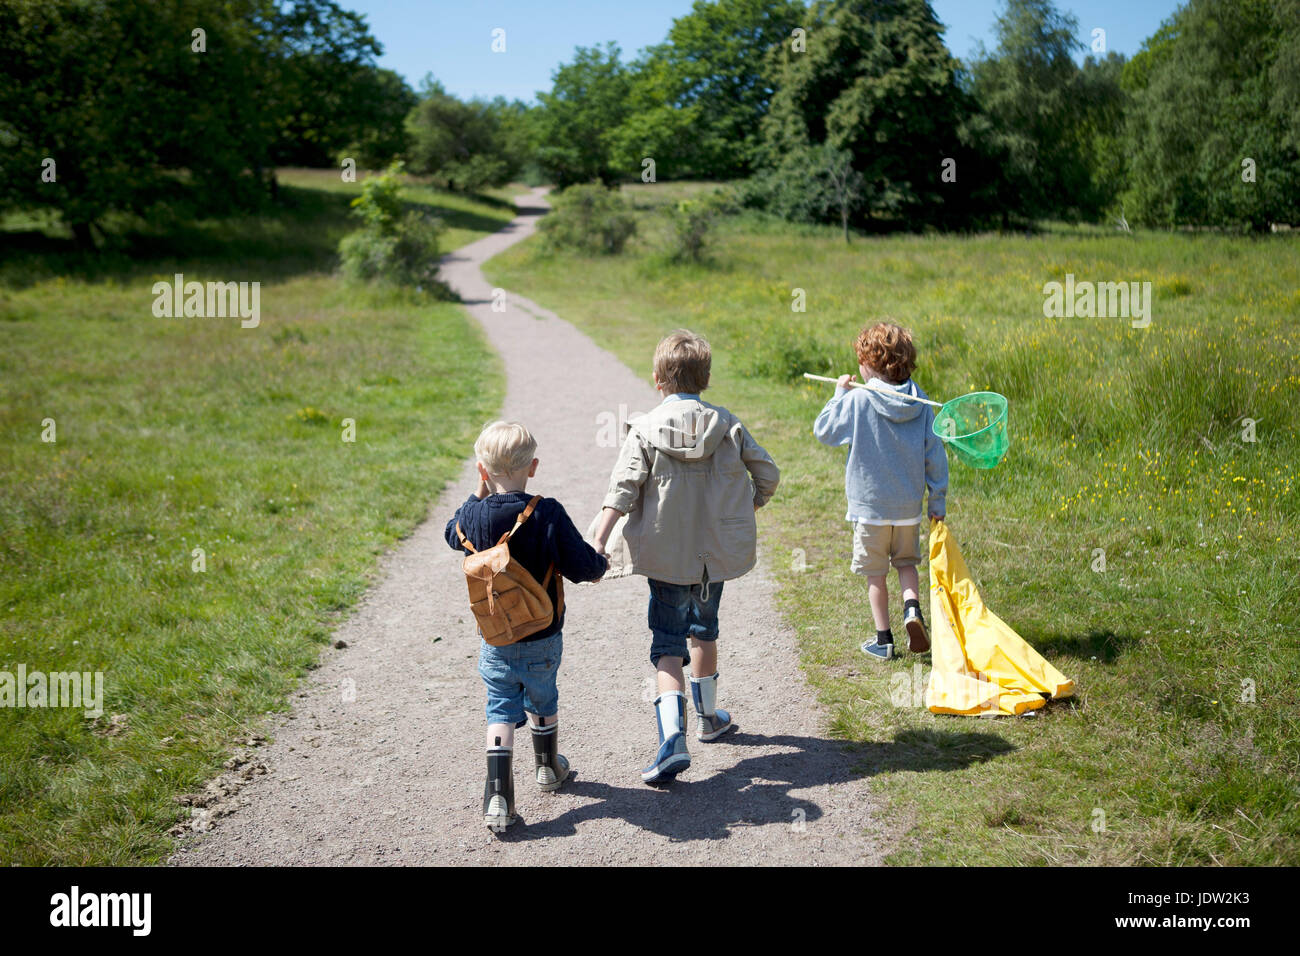 Children walking on dirt road Stock Photo